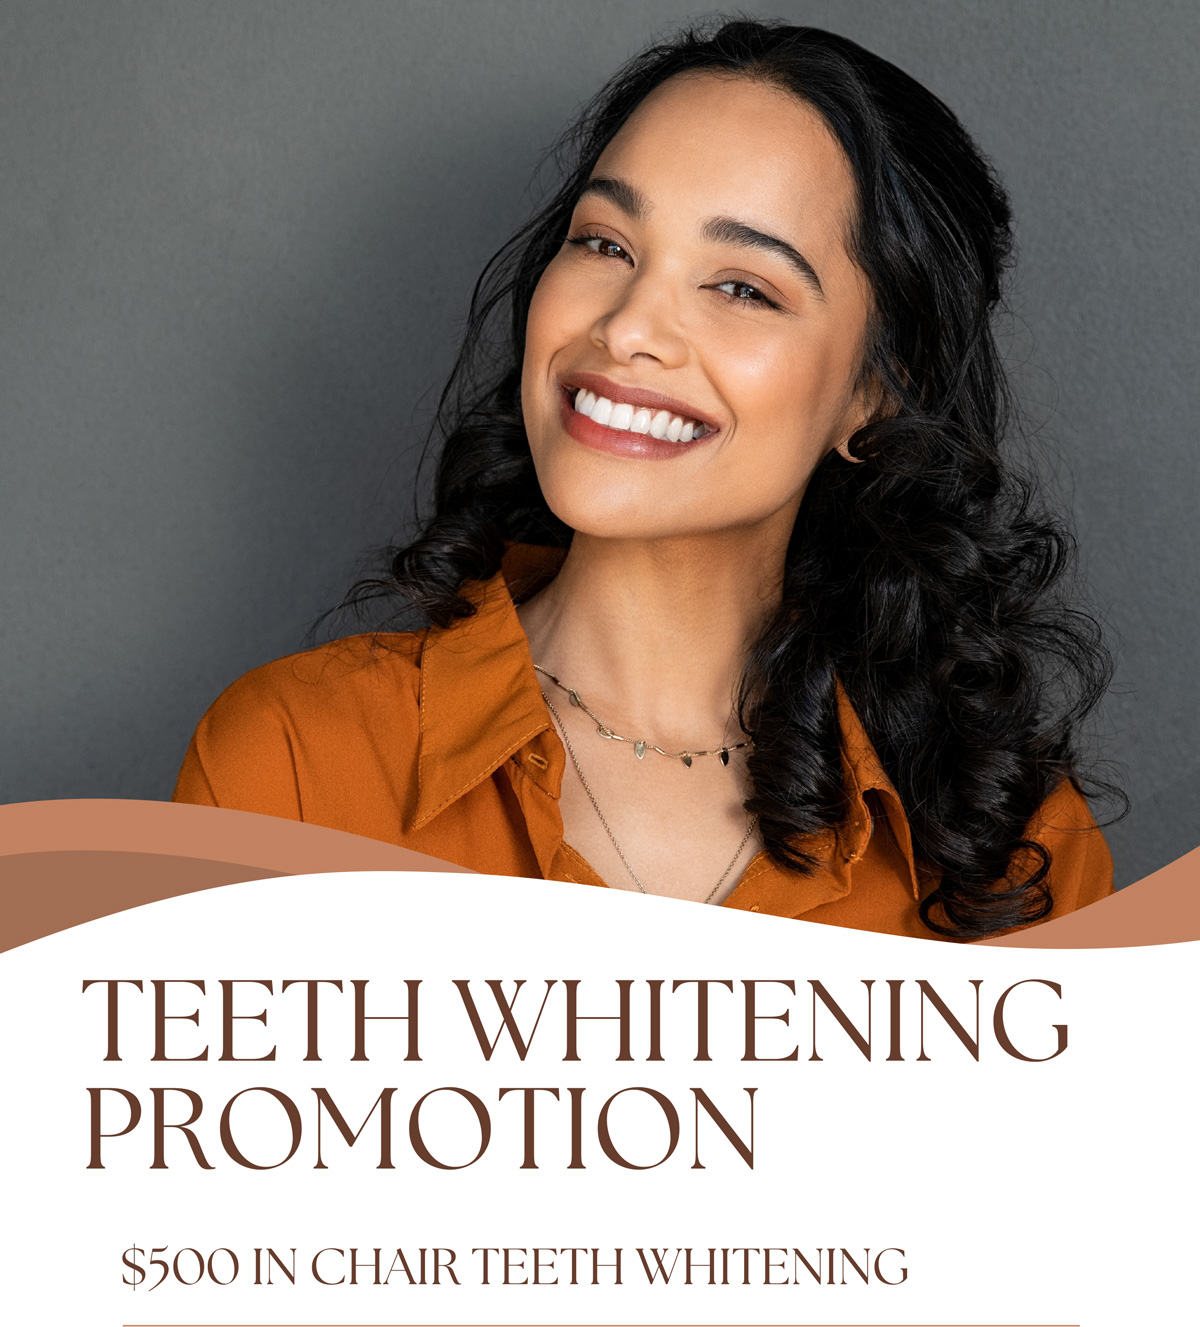 teeth whitening offer